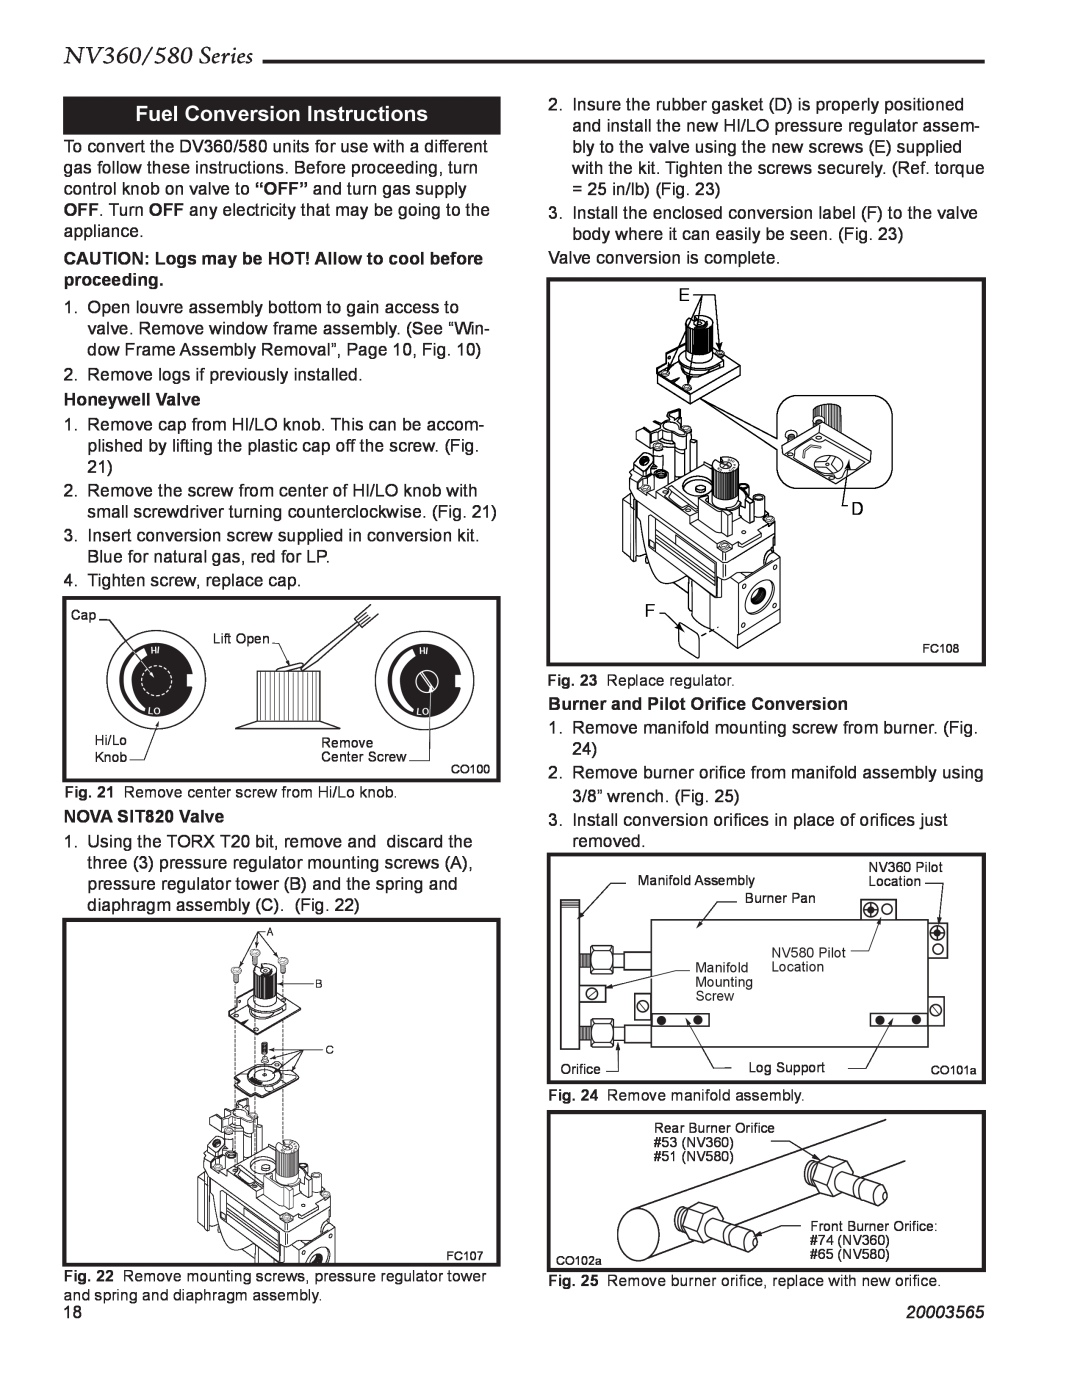 Vermont Casting NV580 Fuel Conversion Instructions, NV360/580 Series, Honeywell Valve, NOVA SIT820 Valve, 20003565 